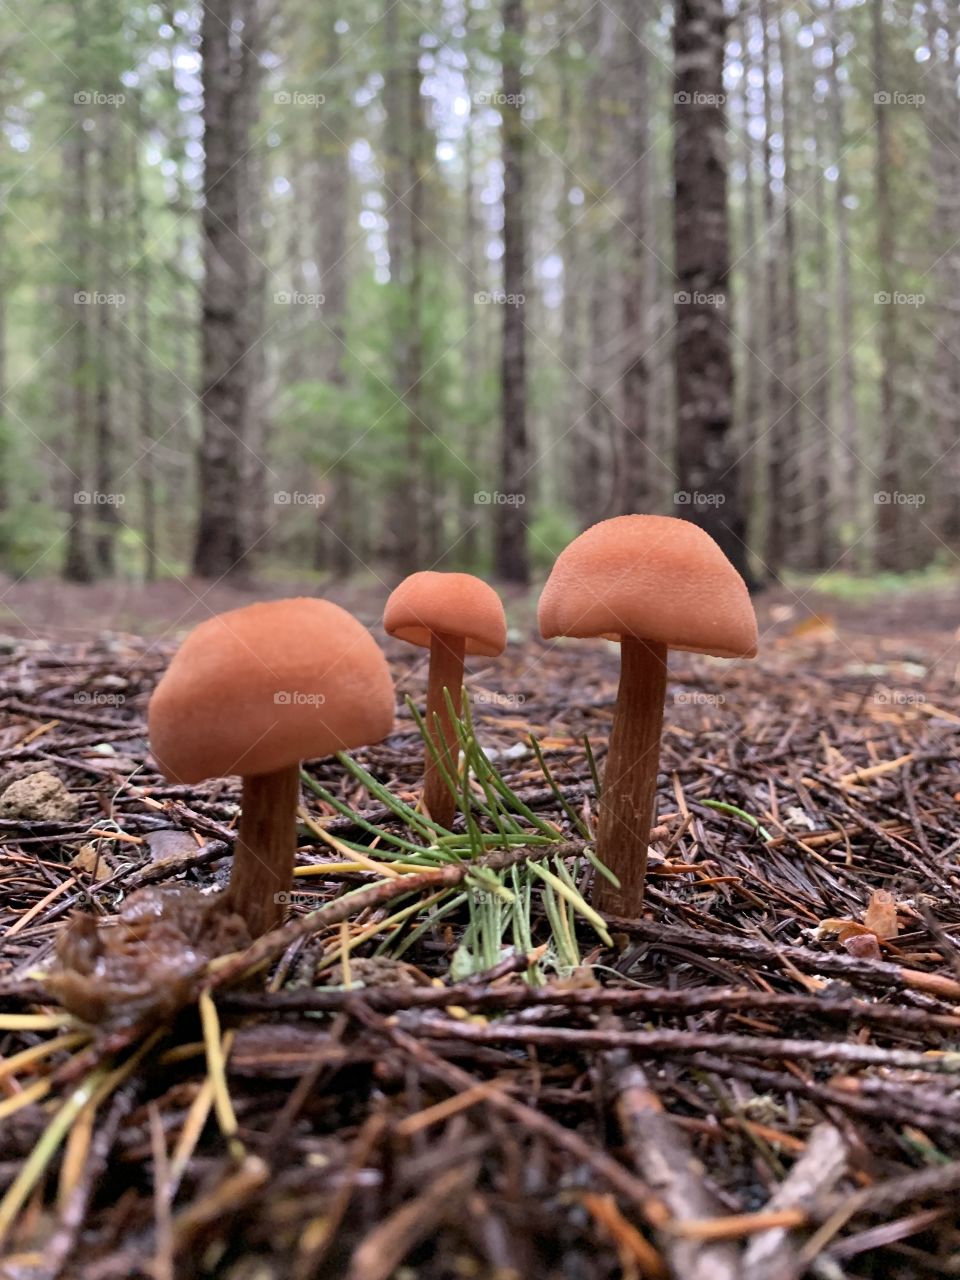 3 wild mushrooms 